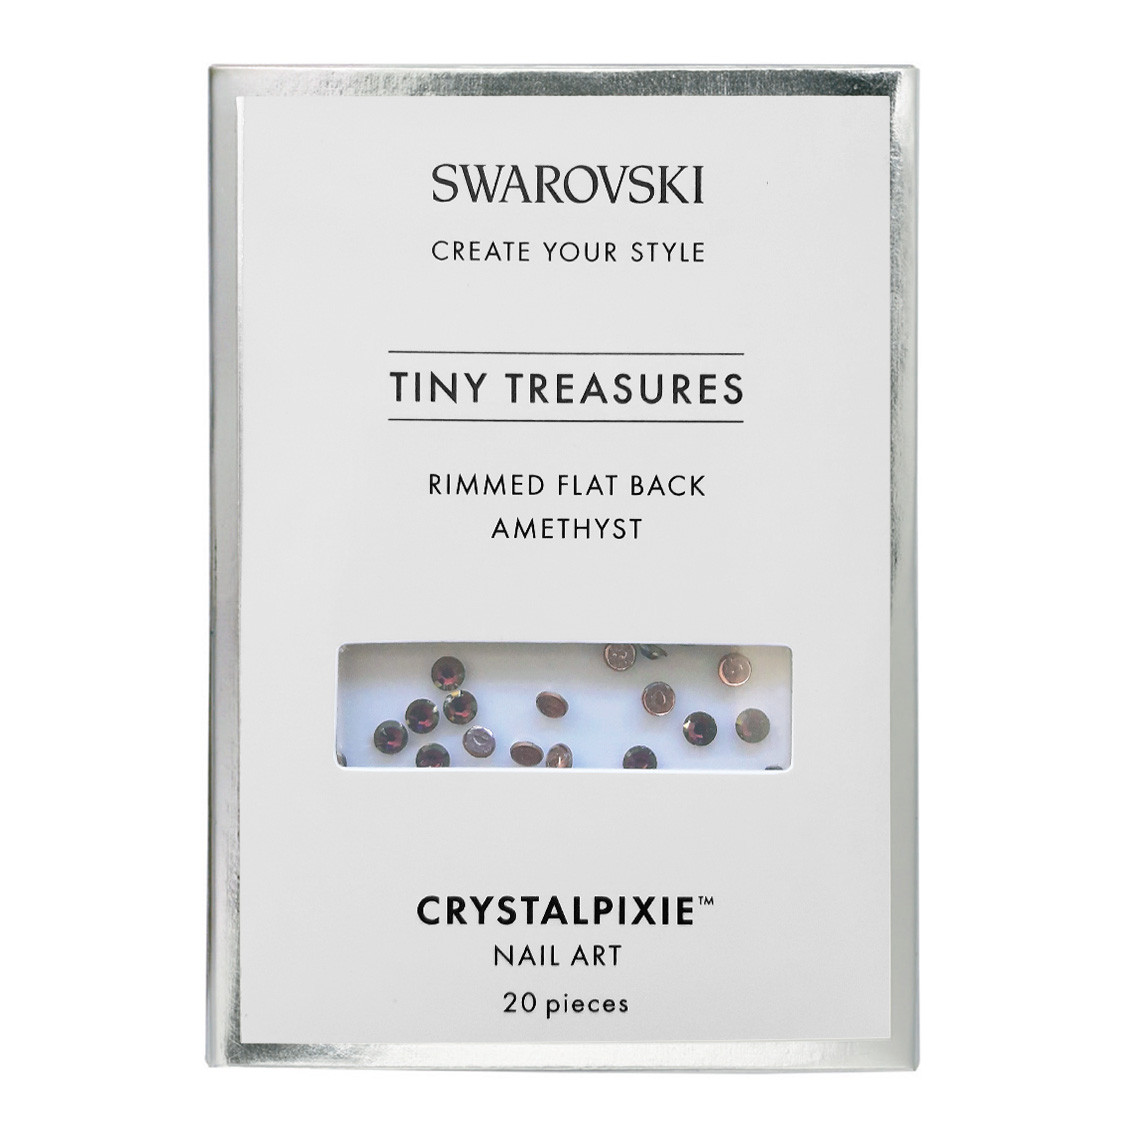 Rimmmed Flat Back - Amethyst 20 pz - Swarovski Tiny Treasures